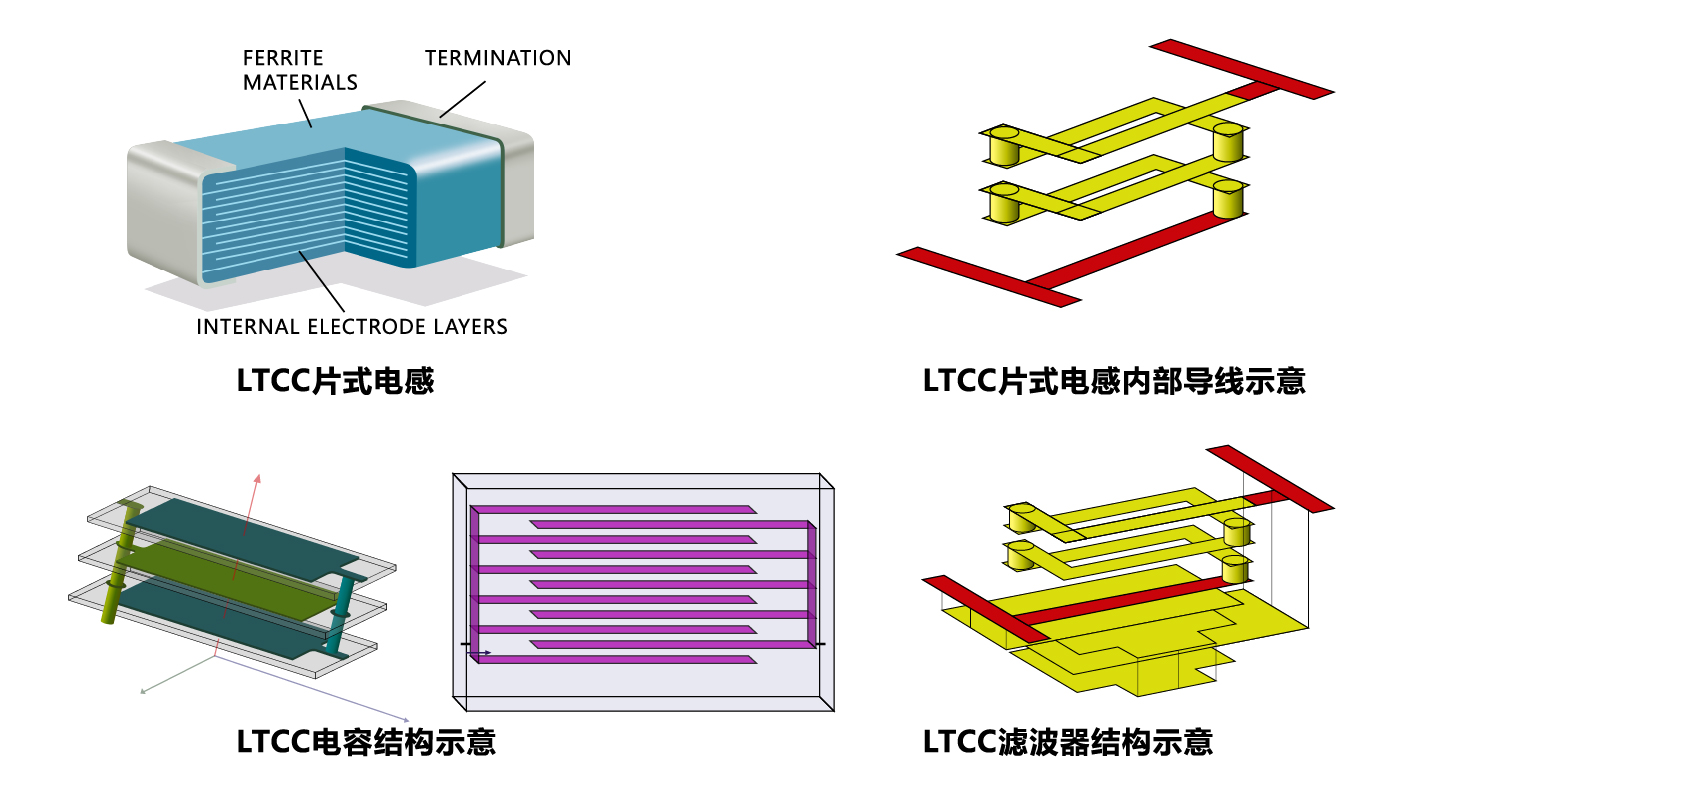 Low Temperature Co-fired Ceramics (LTCC) Technology